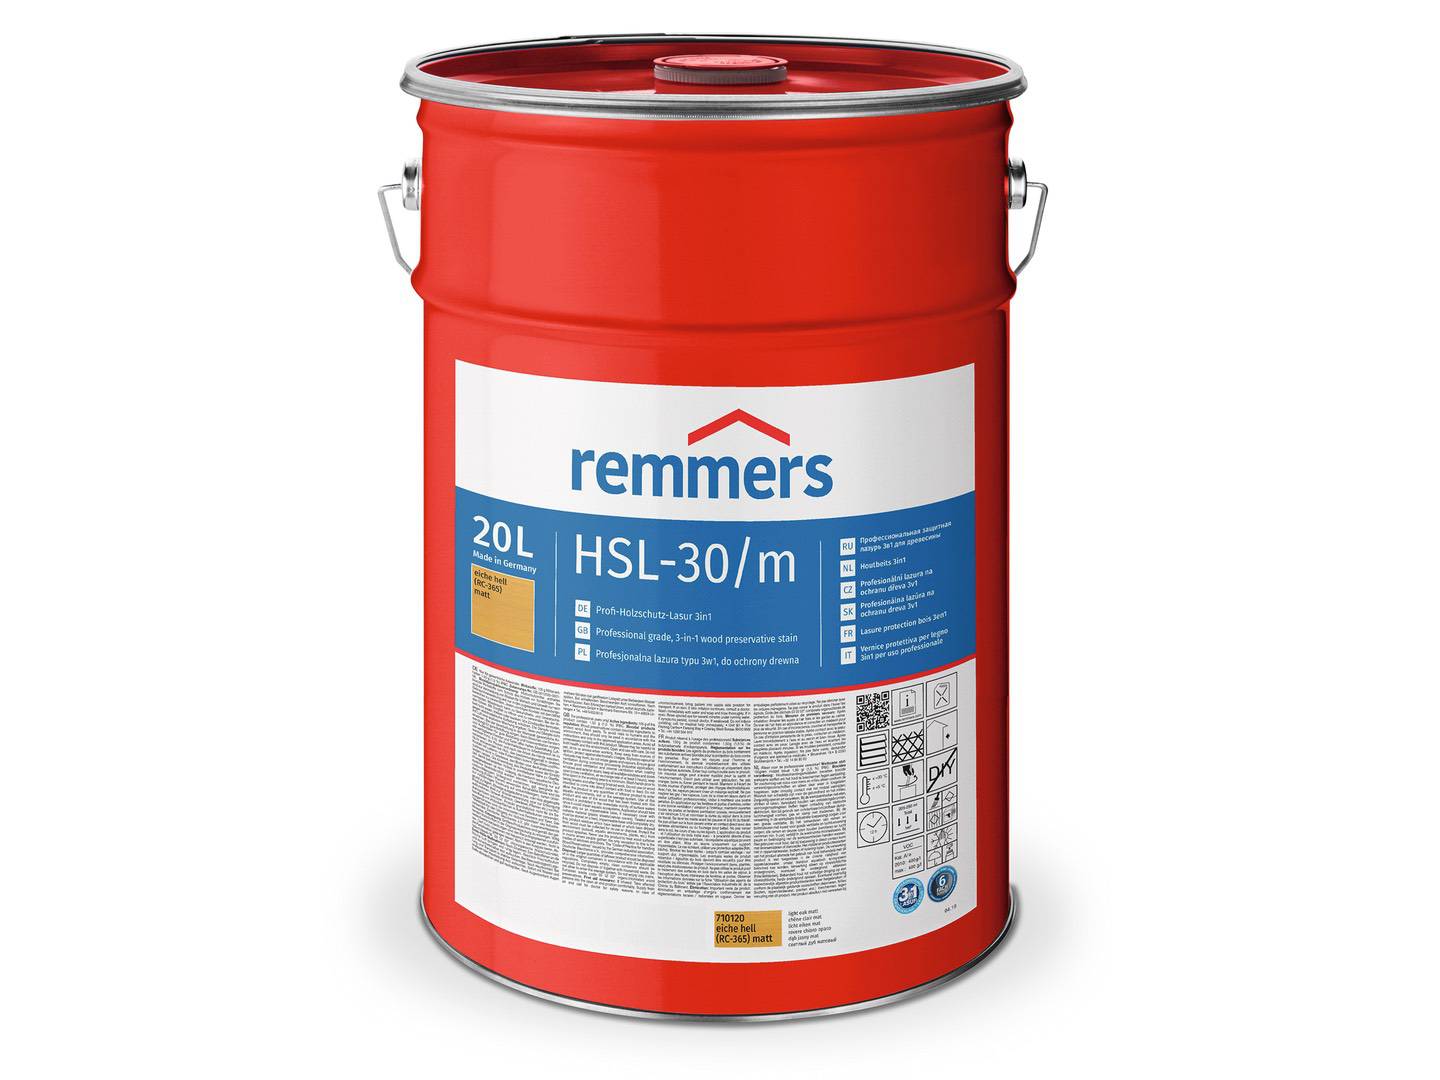 REMMERS HSL-30/m-Profi-Holzschutz-Lasur 3in1 kastanie (RC-555) matt 20 l